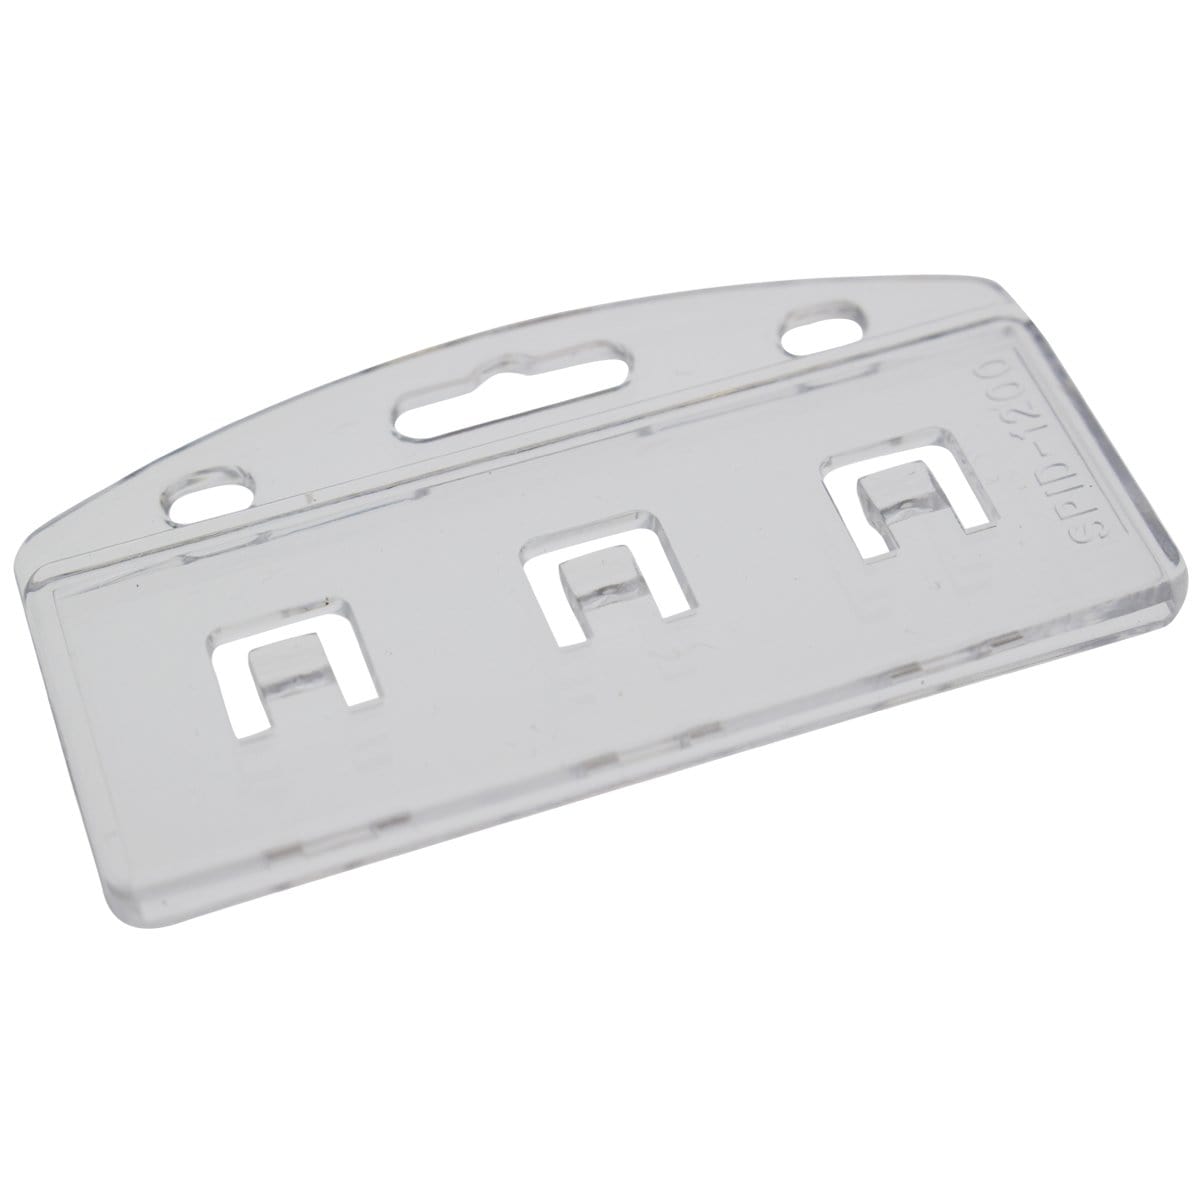 Acrylic Badge With Pin – Smart kard Technologies